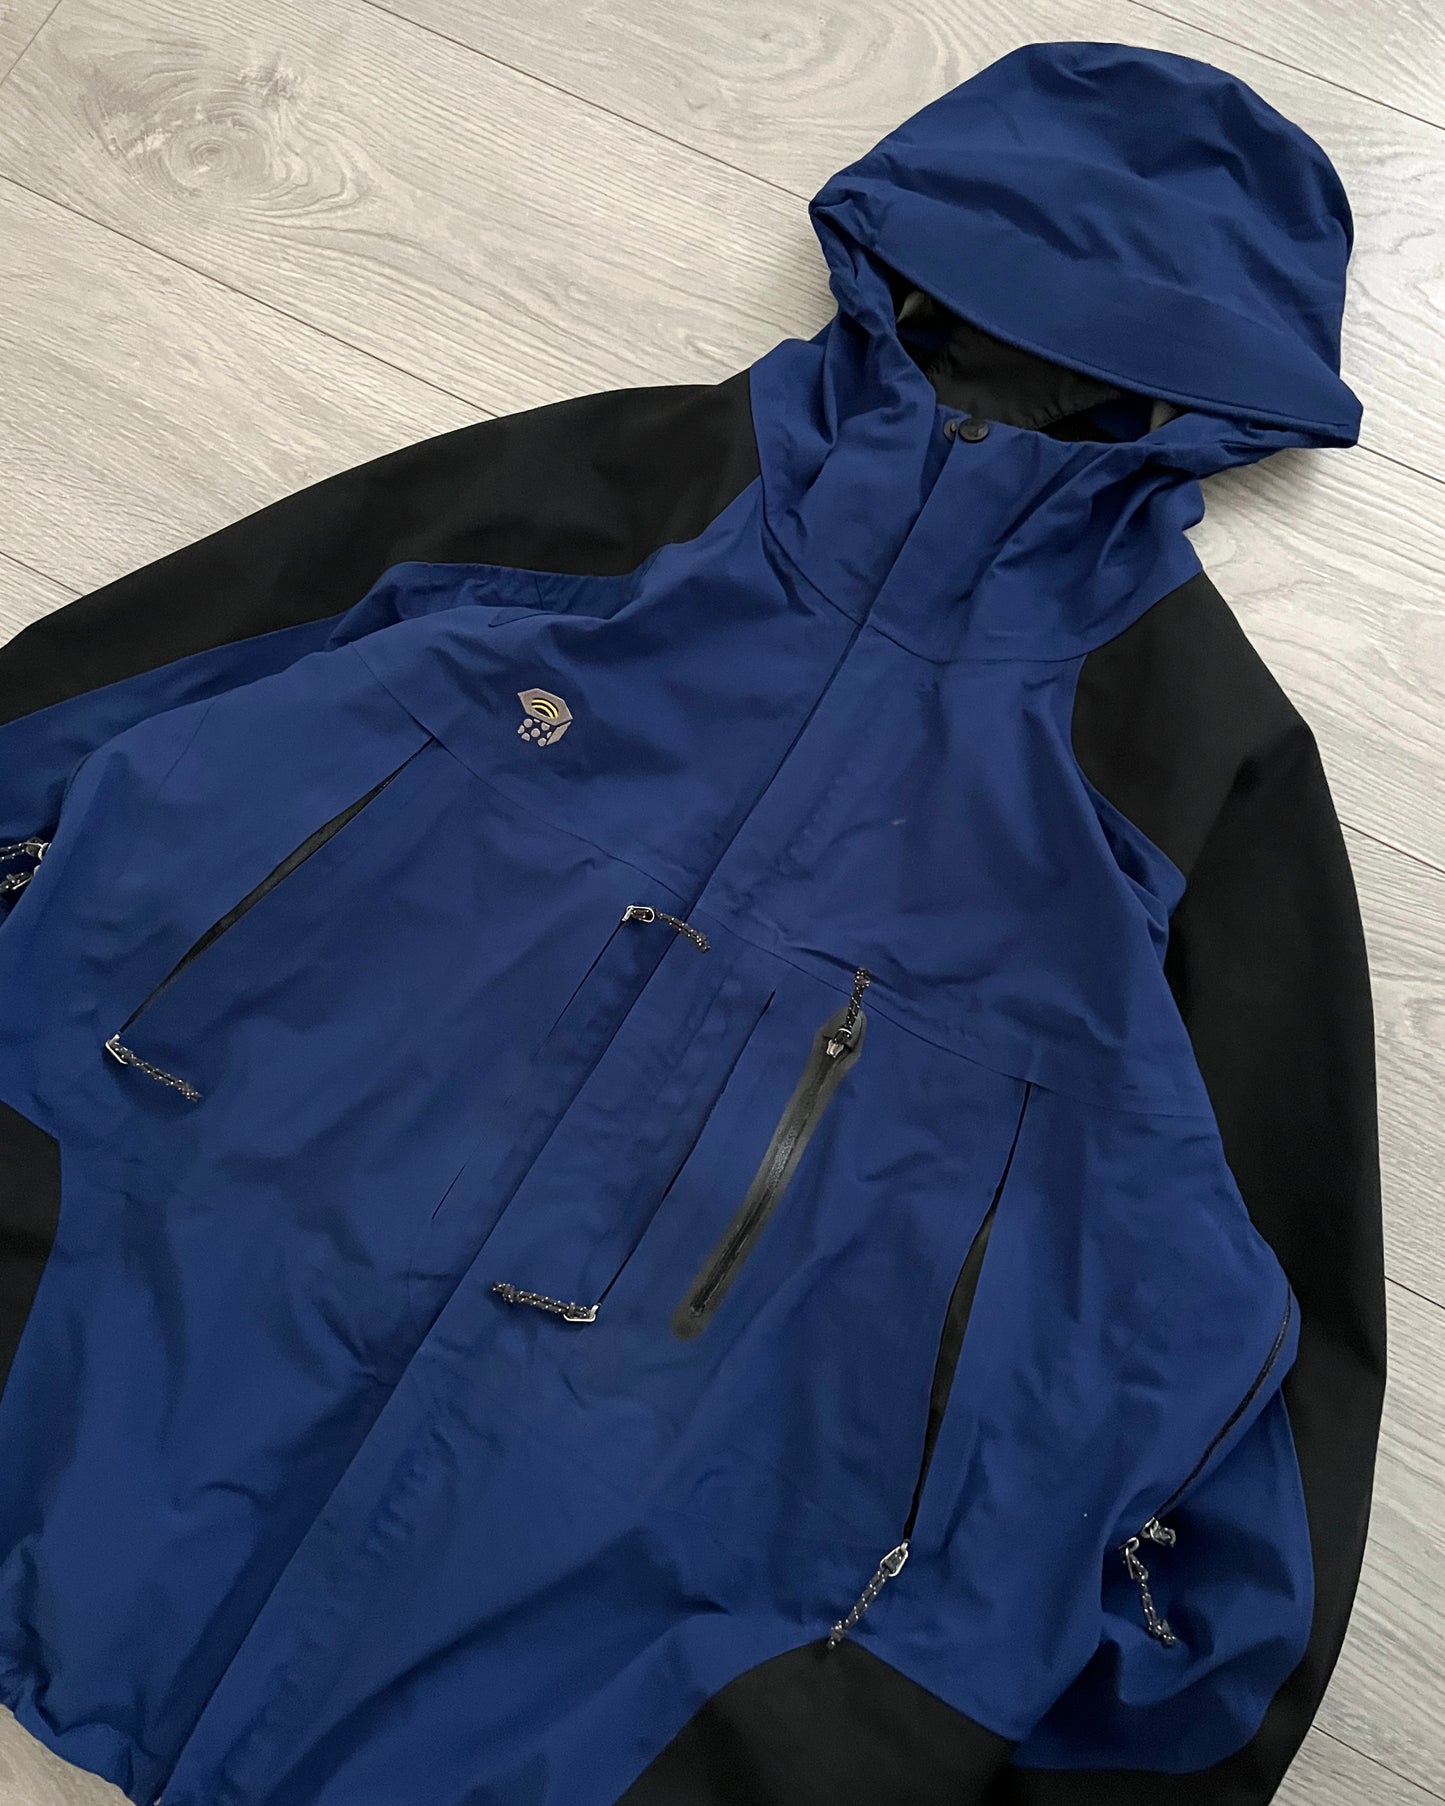 Mountain Hardwear 00s Gore-Tex XCR Technical Jacket - Size XL